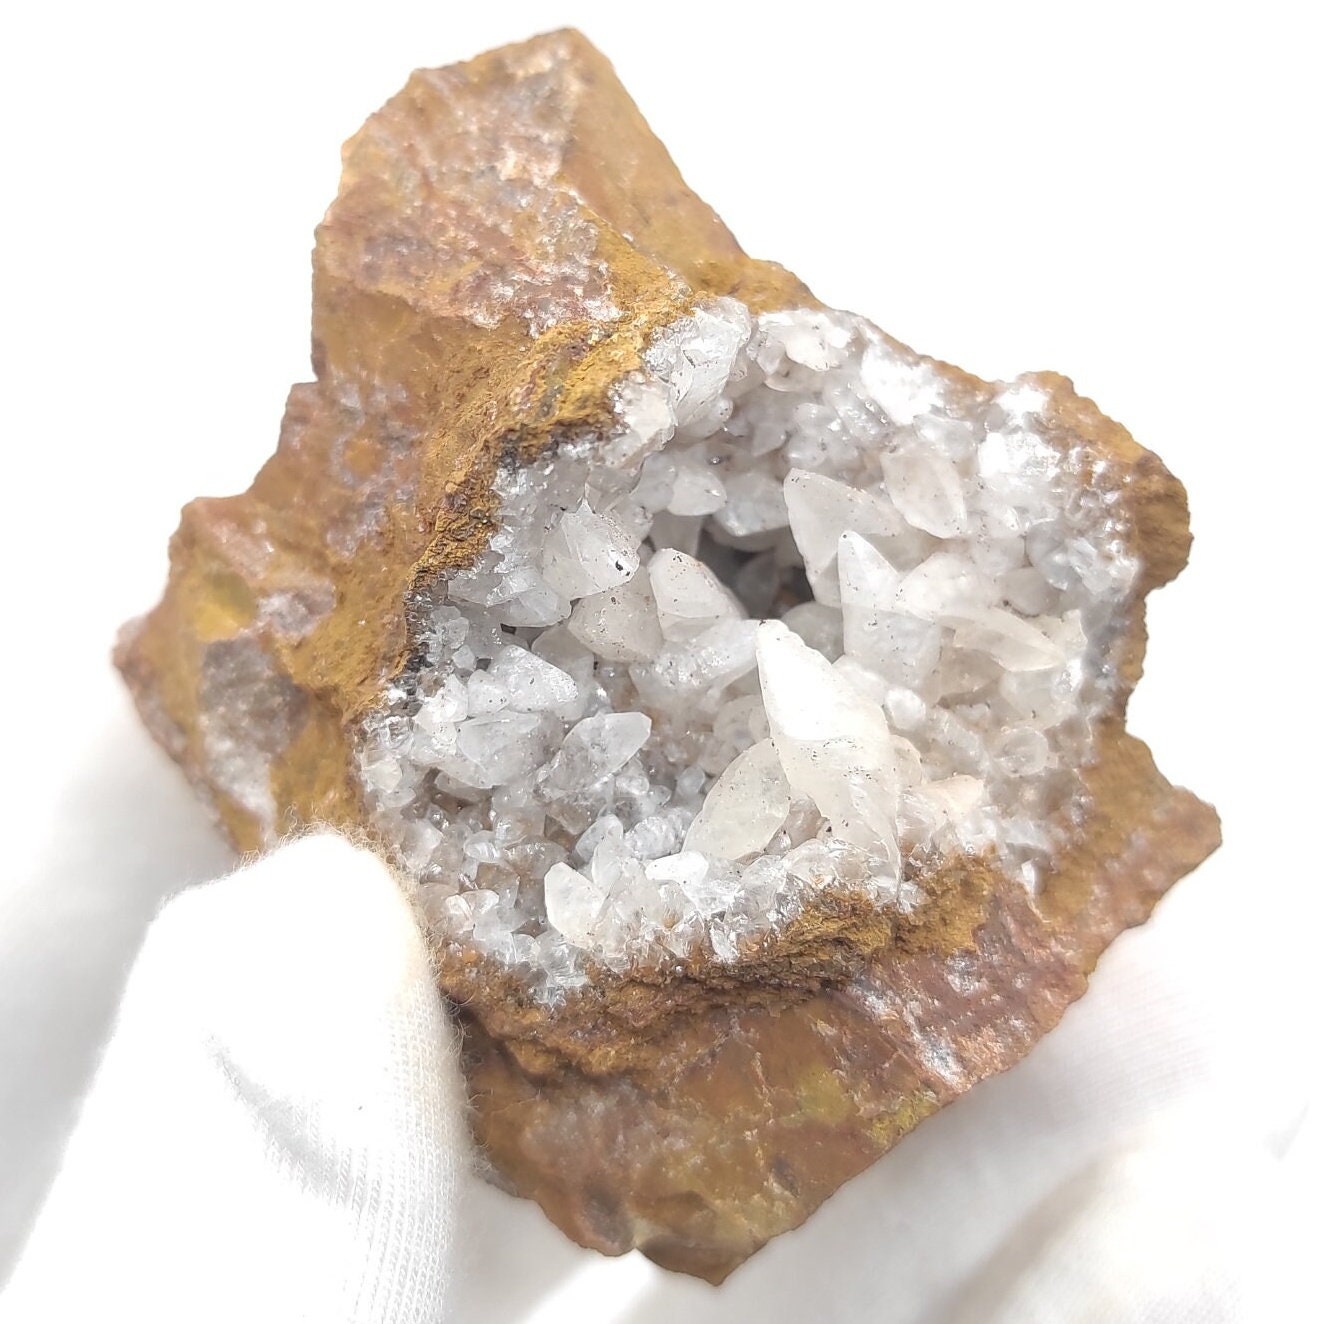 72g UV Reactive Calcite - Phosphorescent Calcite Specimen - Cambridge Cove, Nova Scotia, Canada - UV Minerals - Minerals with Afterglow